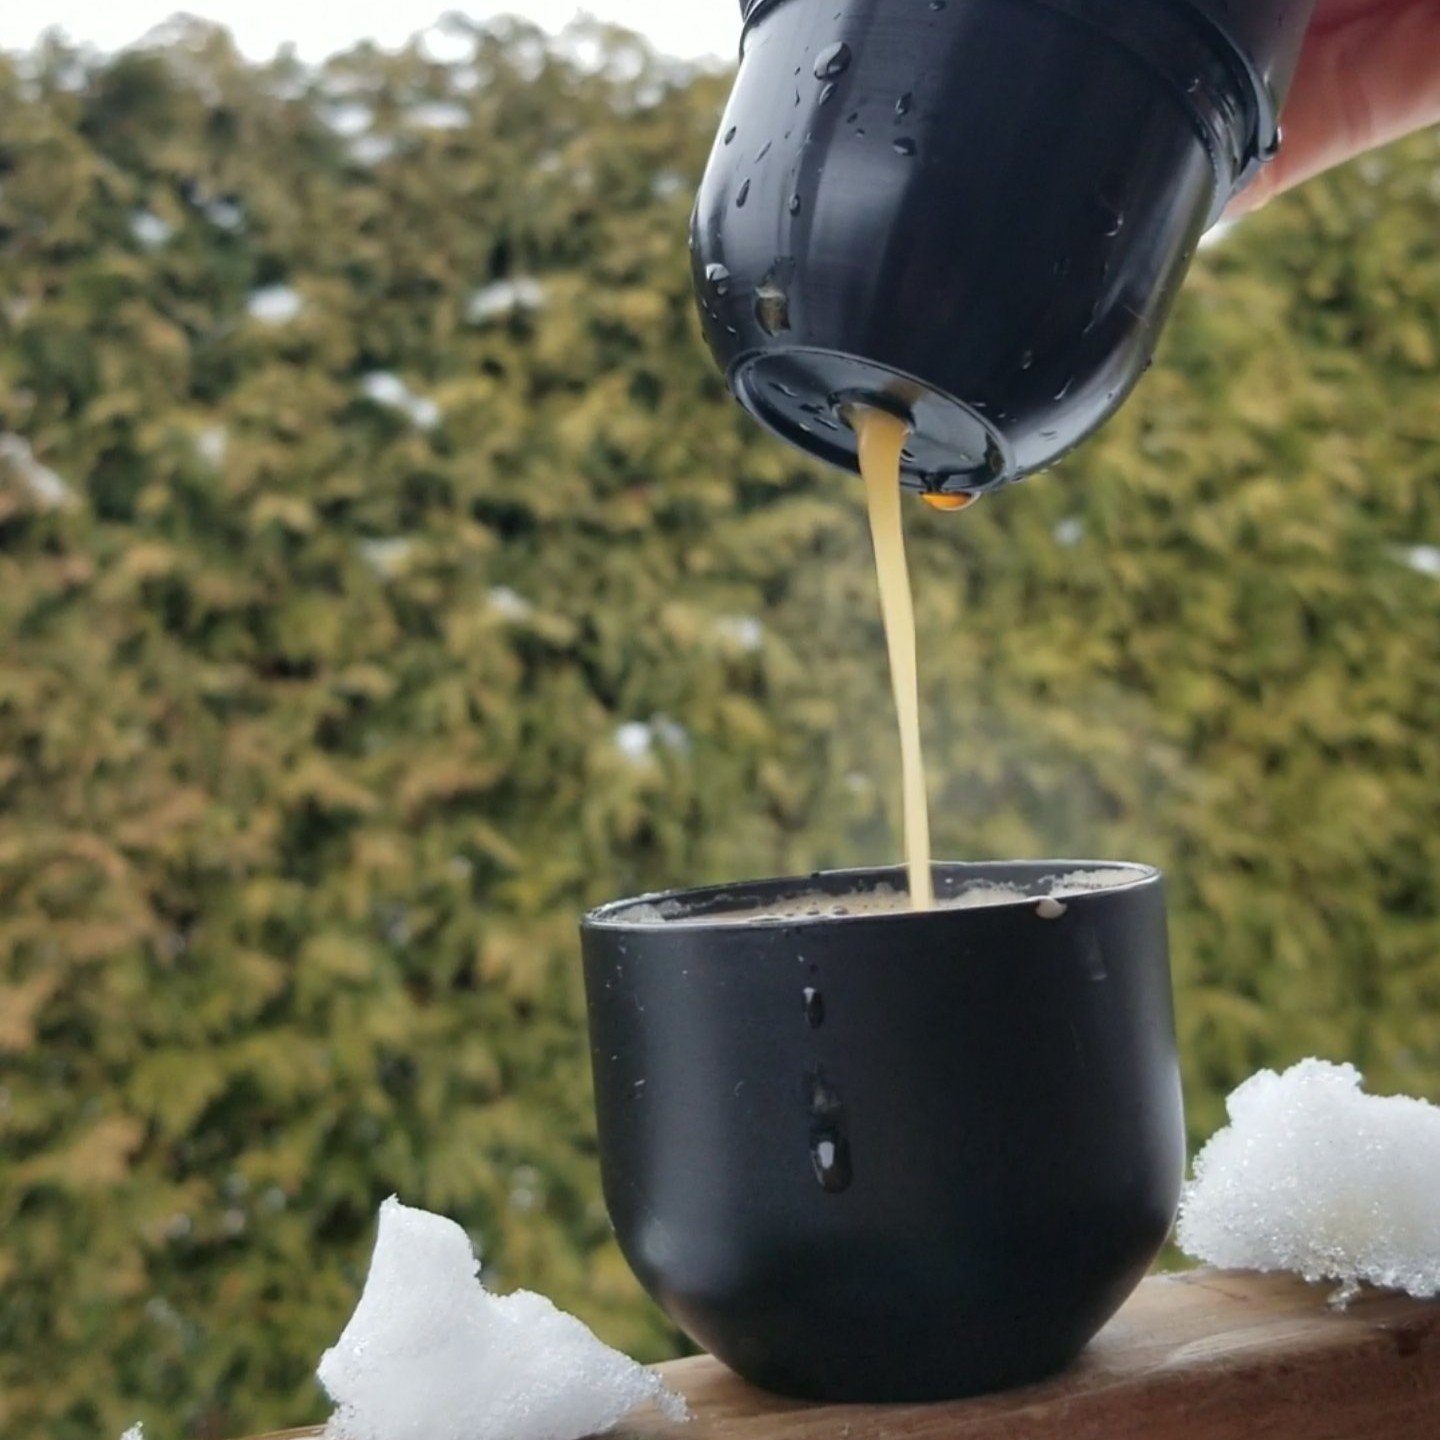 Coffee on the go - Espresso maker | GiftIdeas.ca